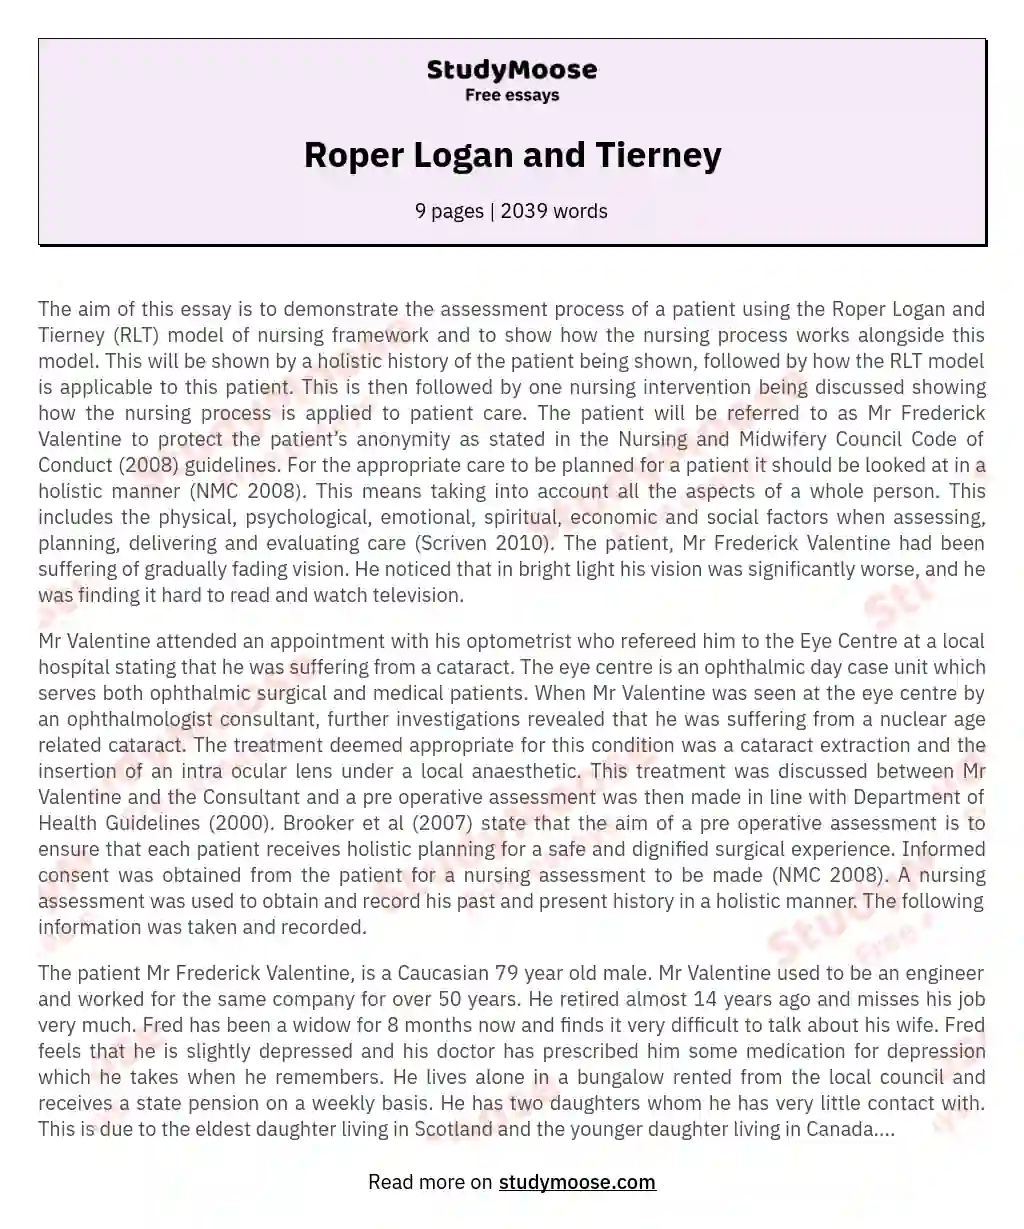 Roper Logan and Tierney essay